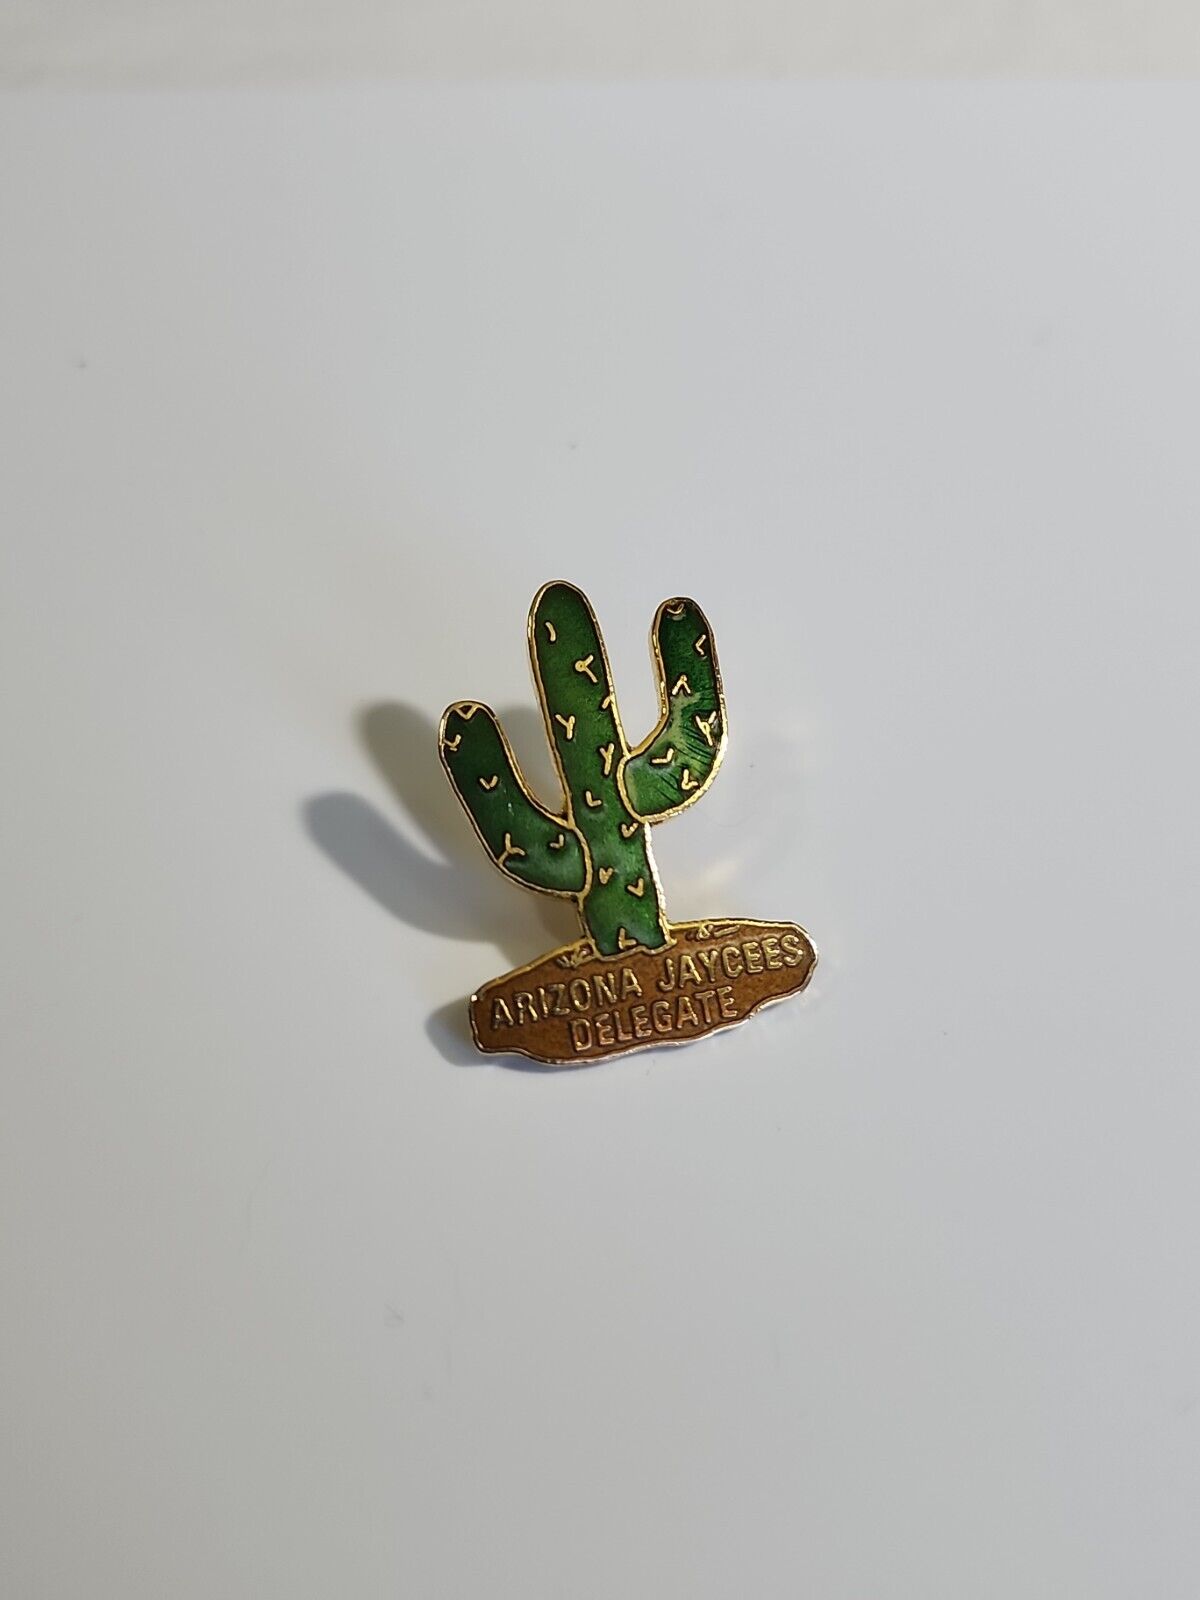 Arizona Jaycees Delegate Lapel Pin Cactus